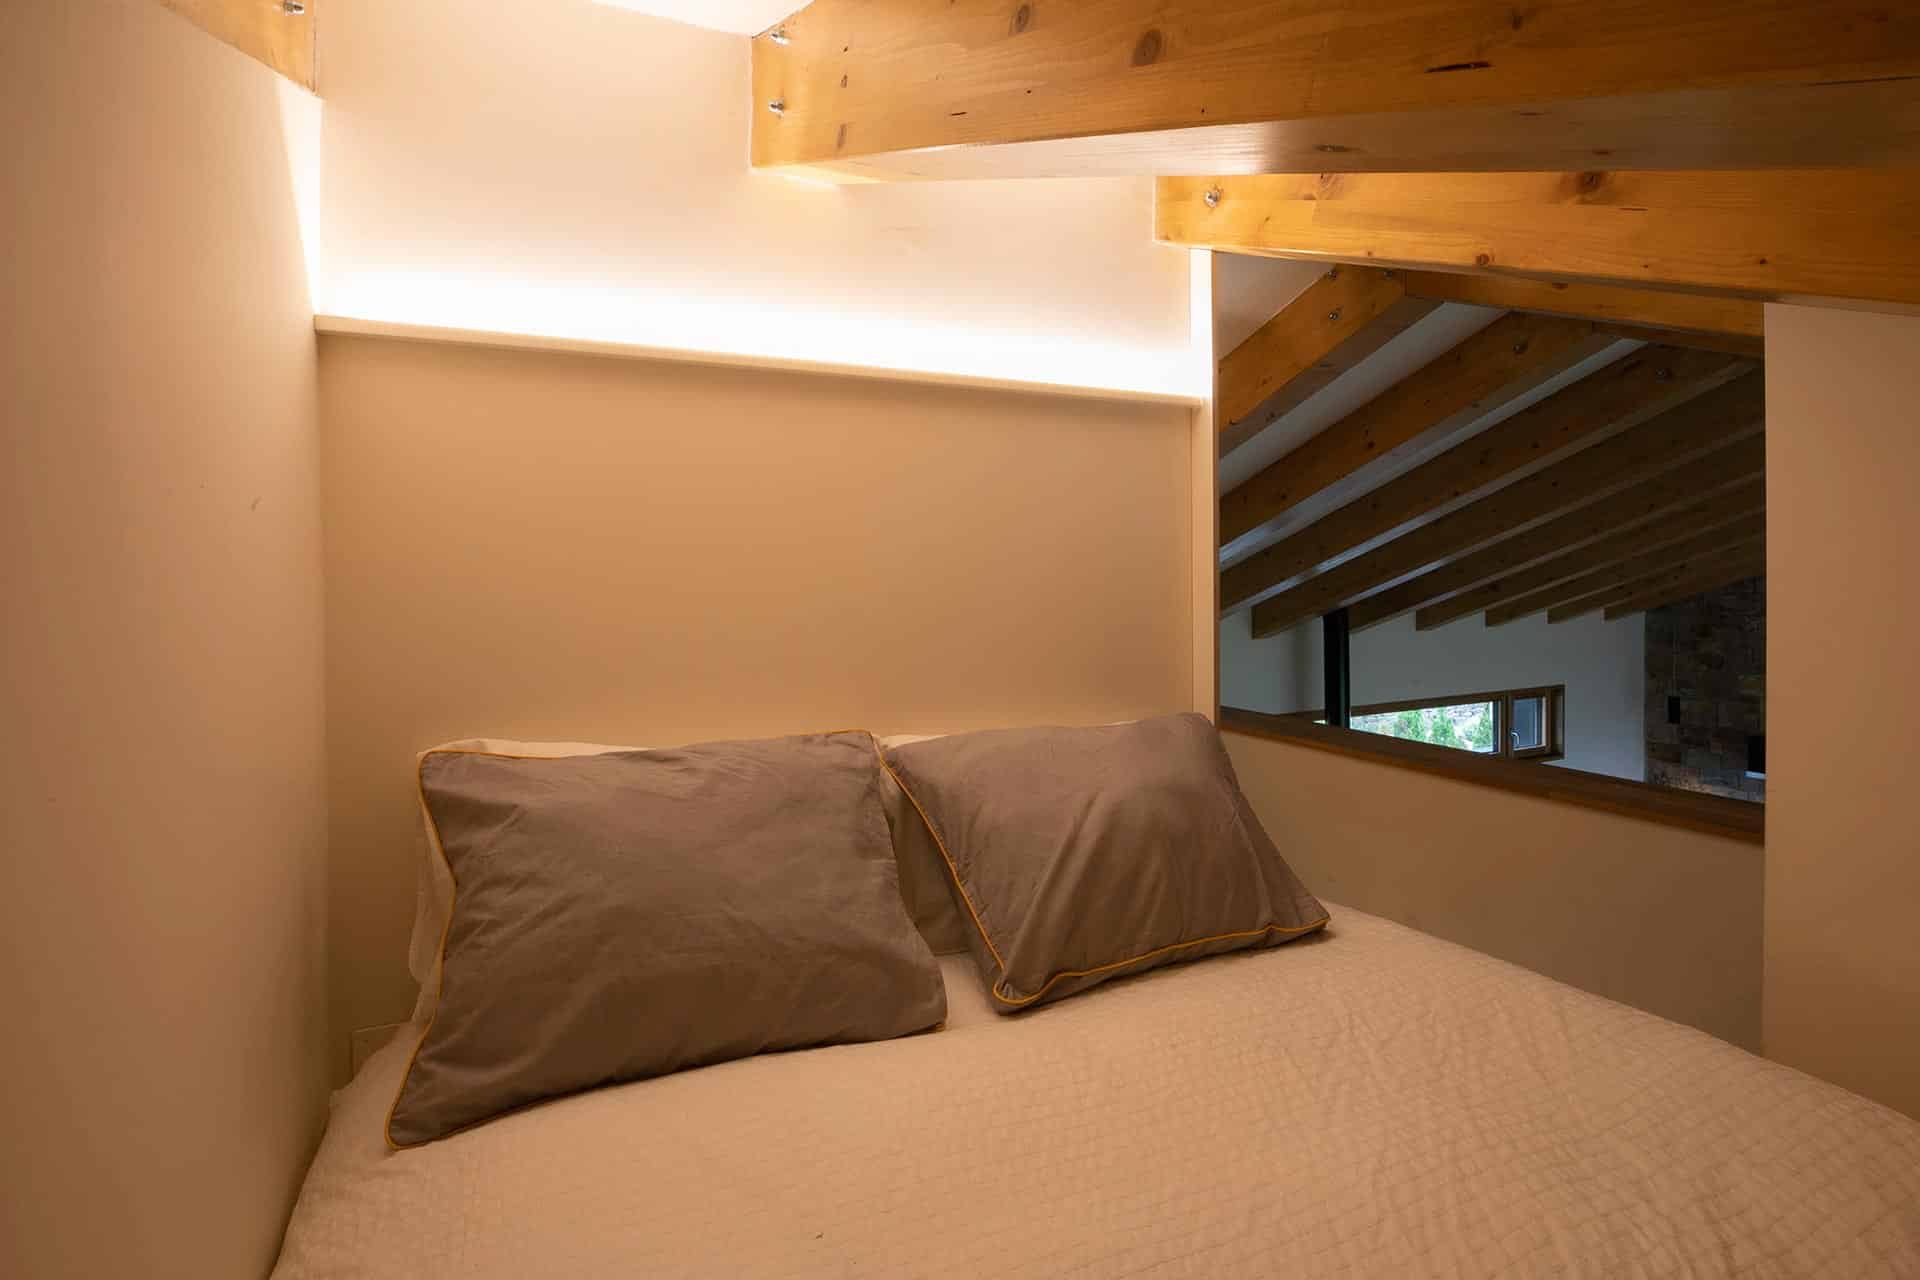 Dormitorio de alojamiento moderno en Proaño diseñada por Moah Arquitectos en Cantabria